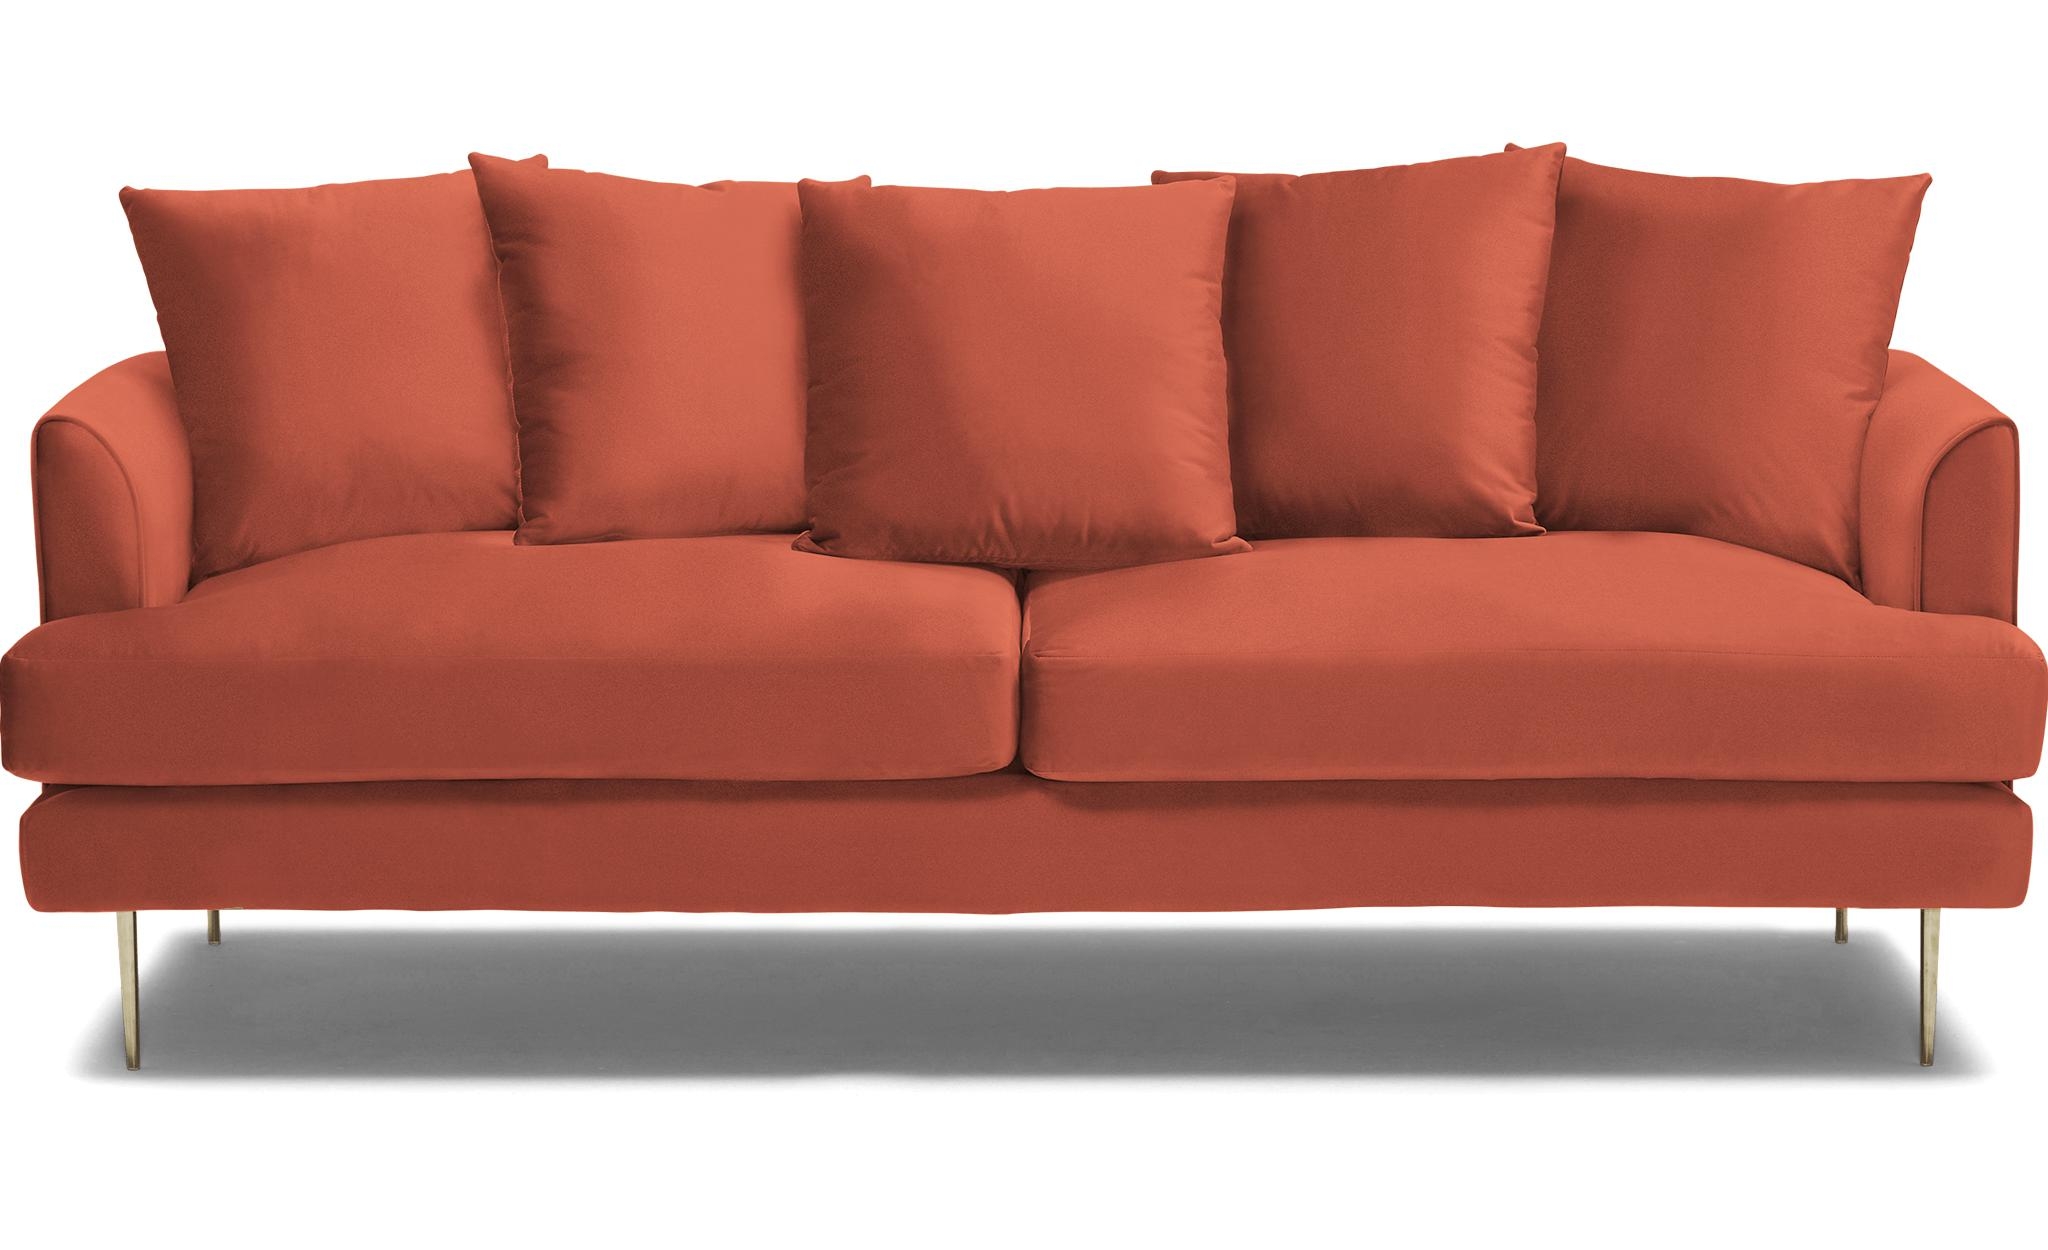 Orange Aime Mid Century Modern Sofa - Key Largo Coral - Image 0